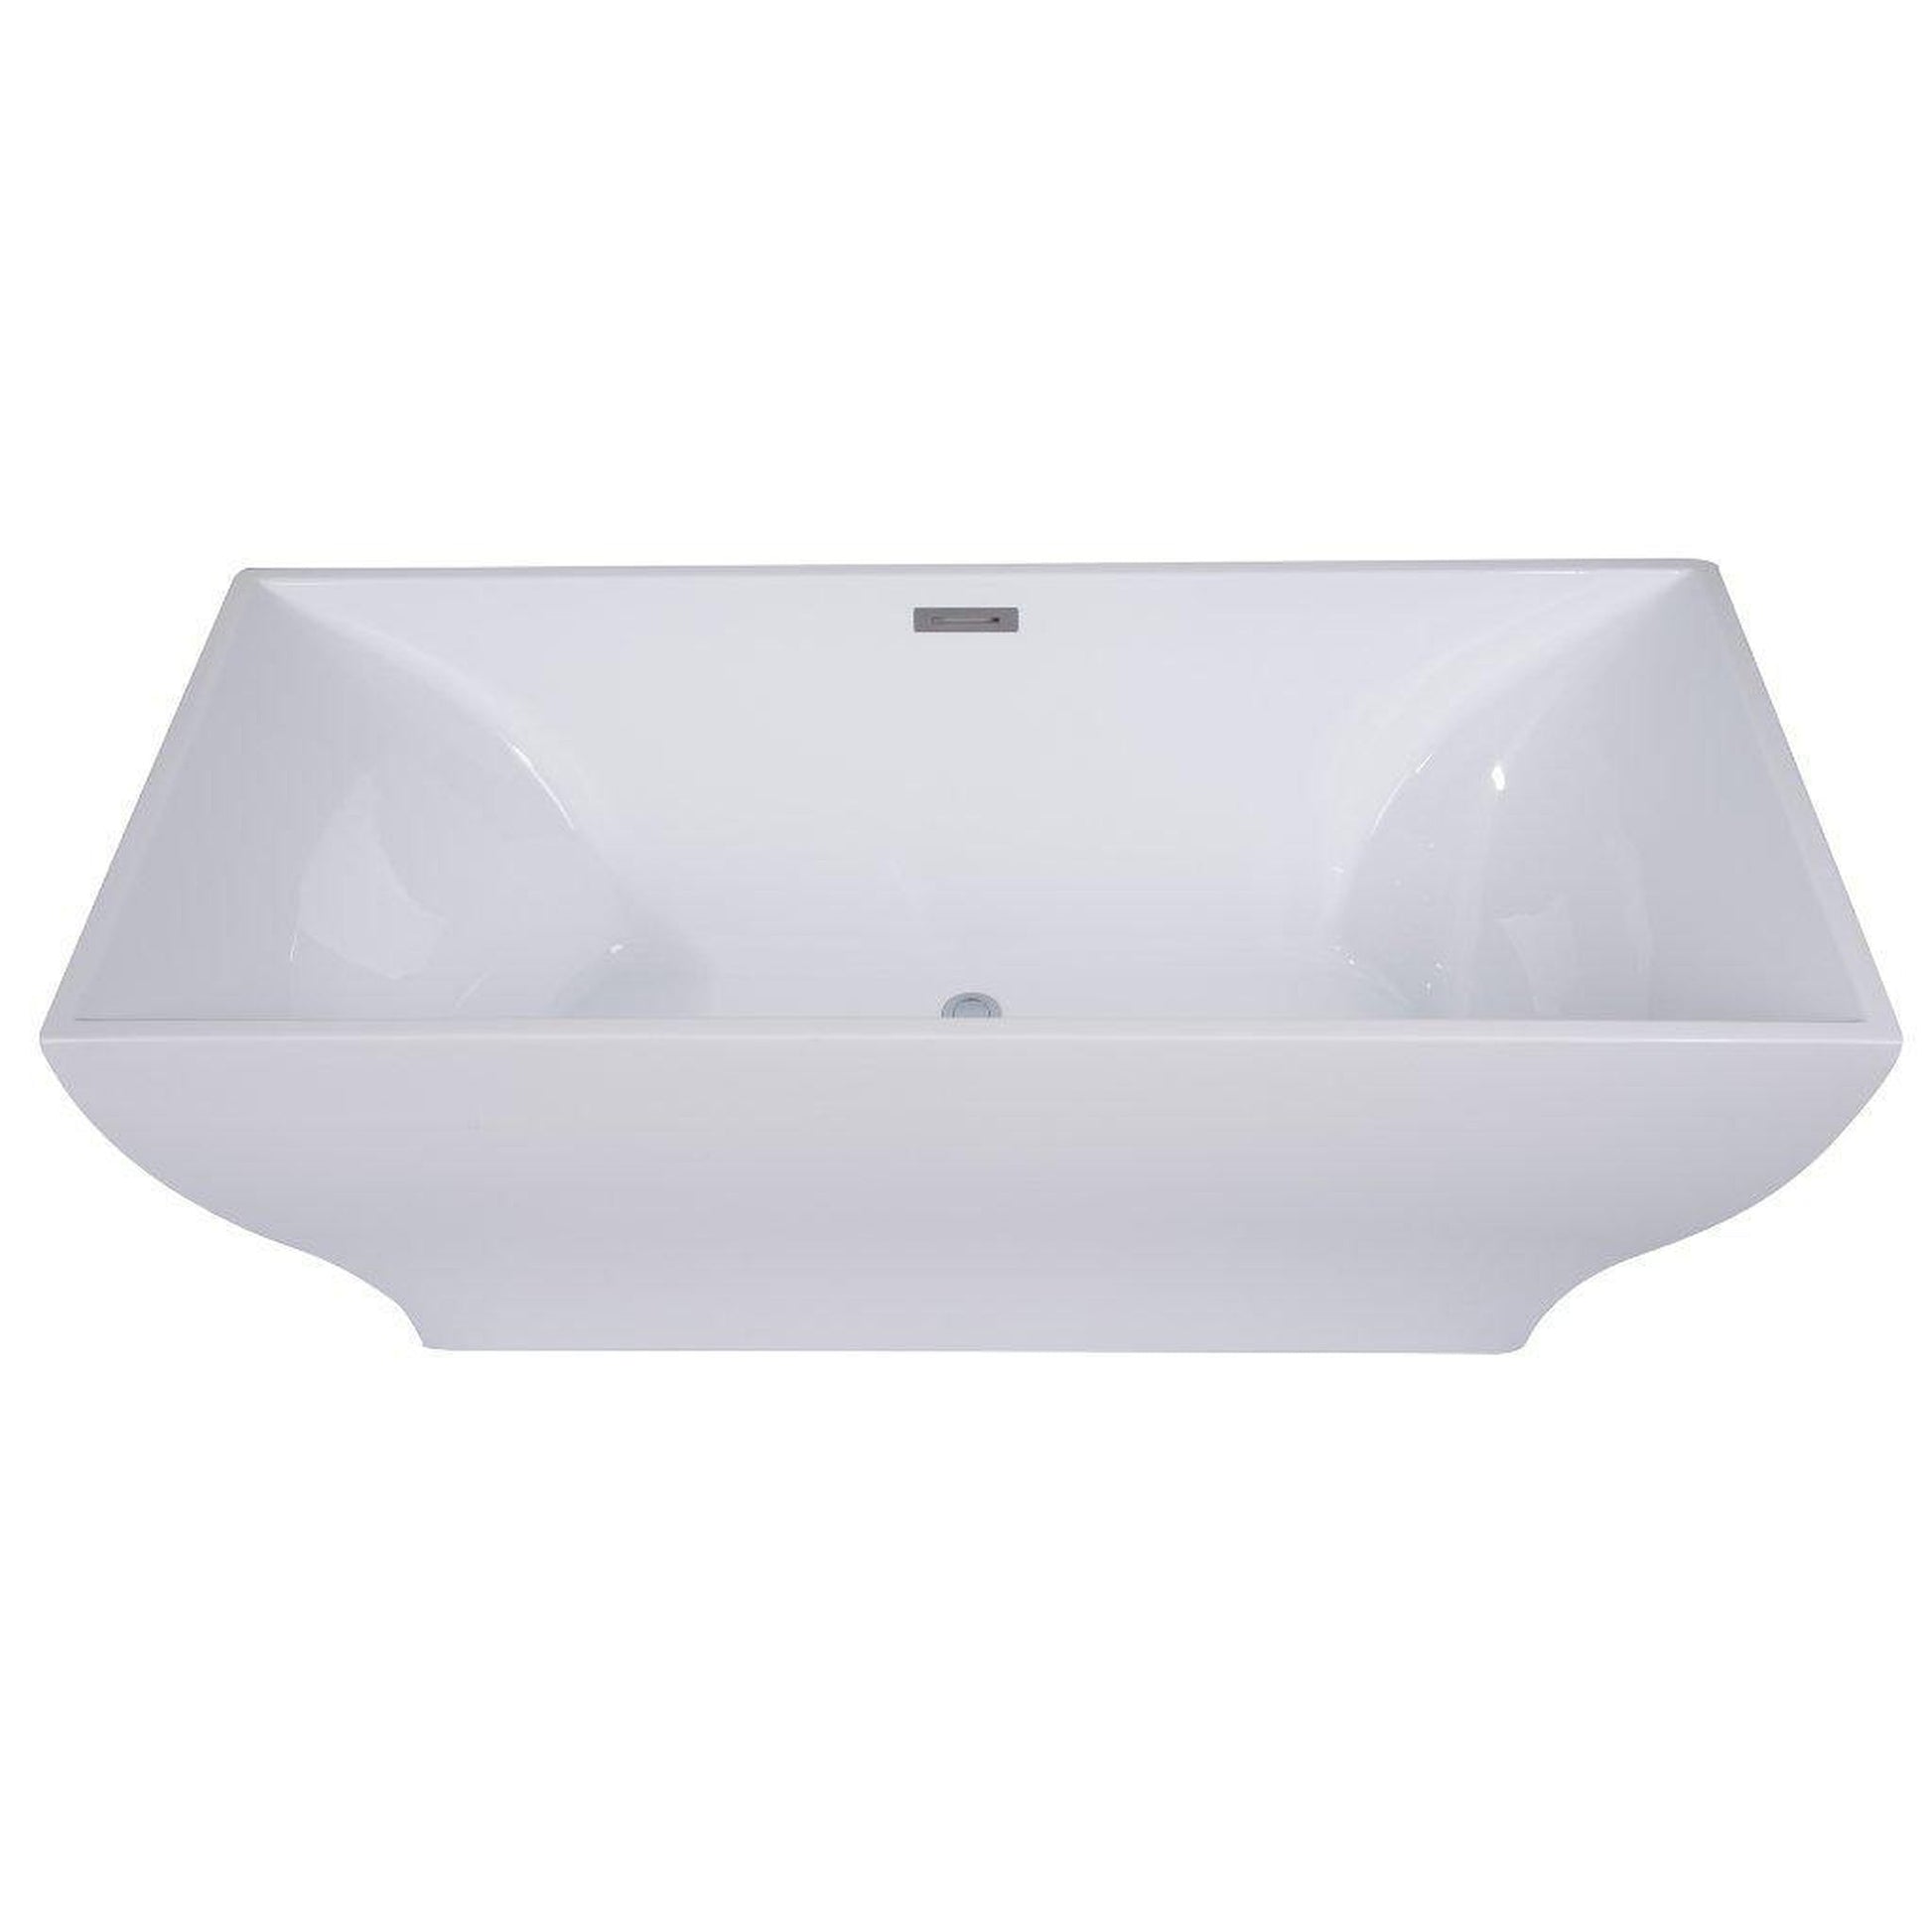 ALFI Brand AB8840 67" One Person Freestanding White Rectangle Acrylic Soaking Bathtub